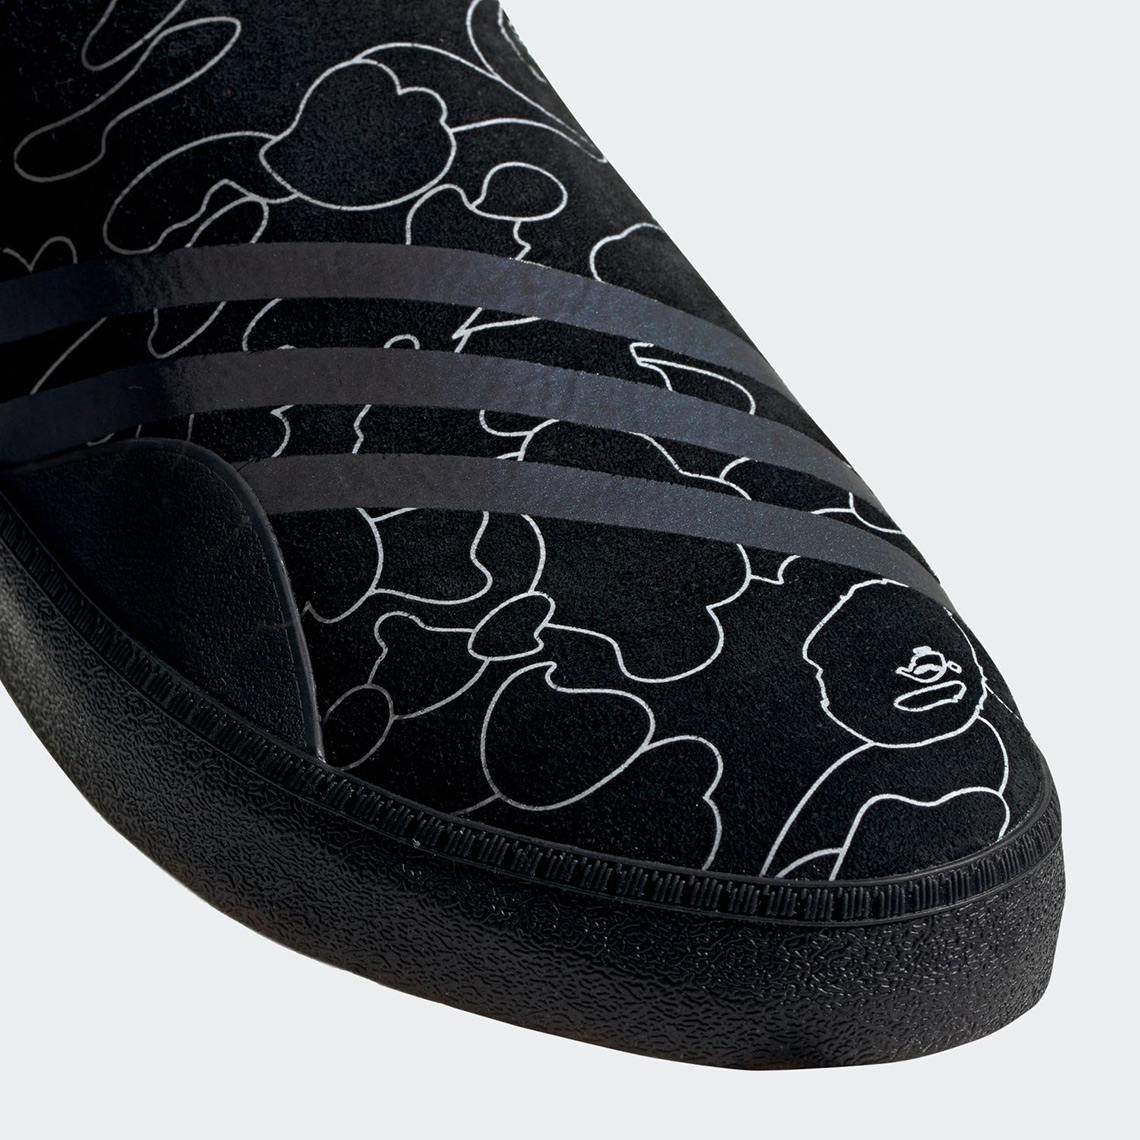 BAPE adidas 3ST 003 DB3003 Release Info | SneakerNews.com